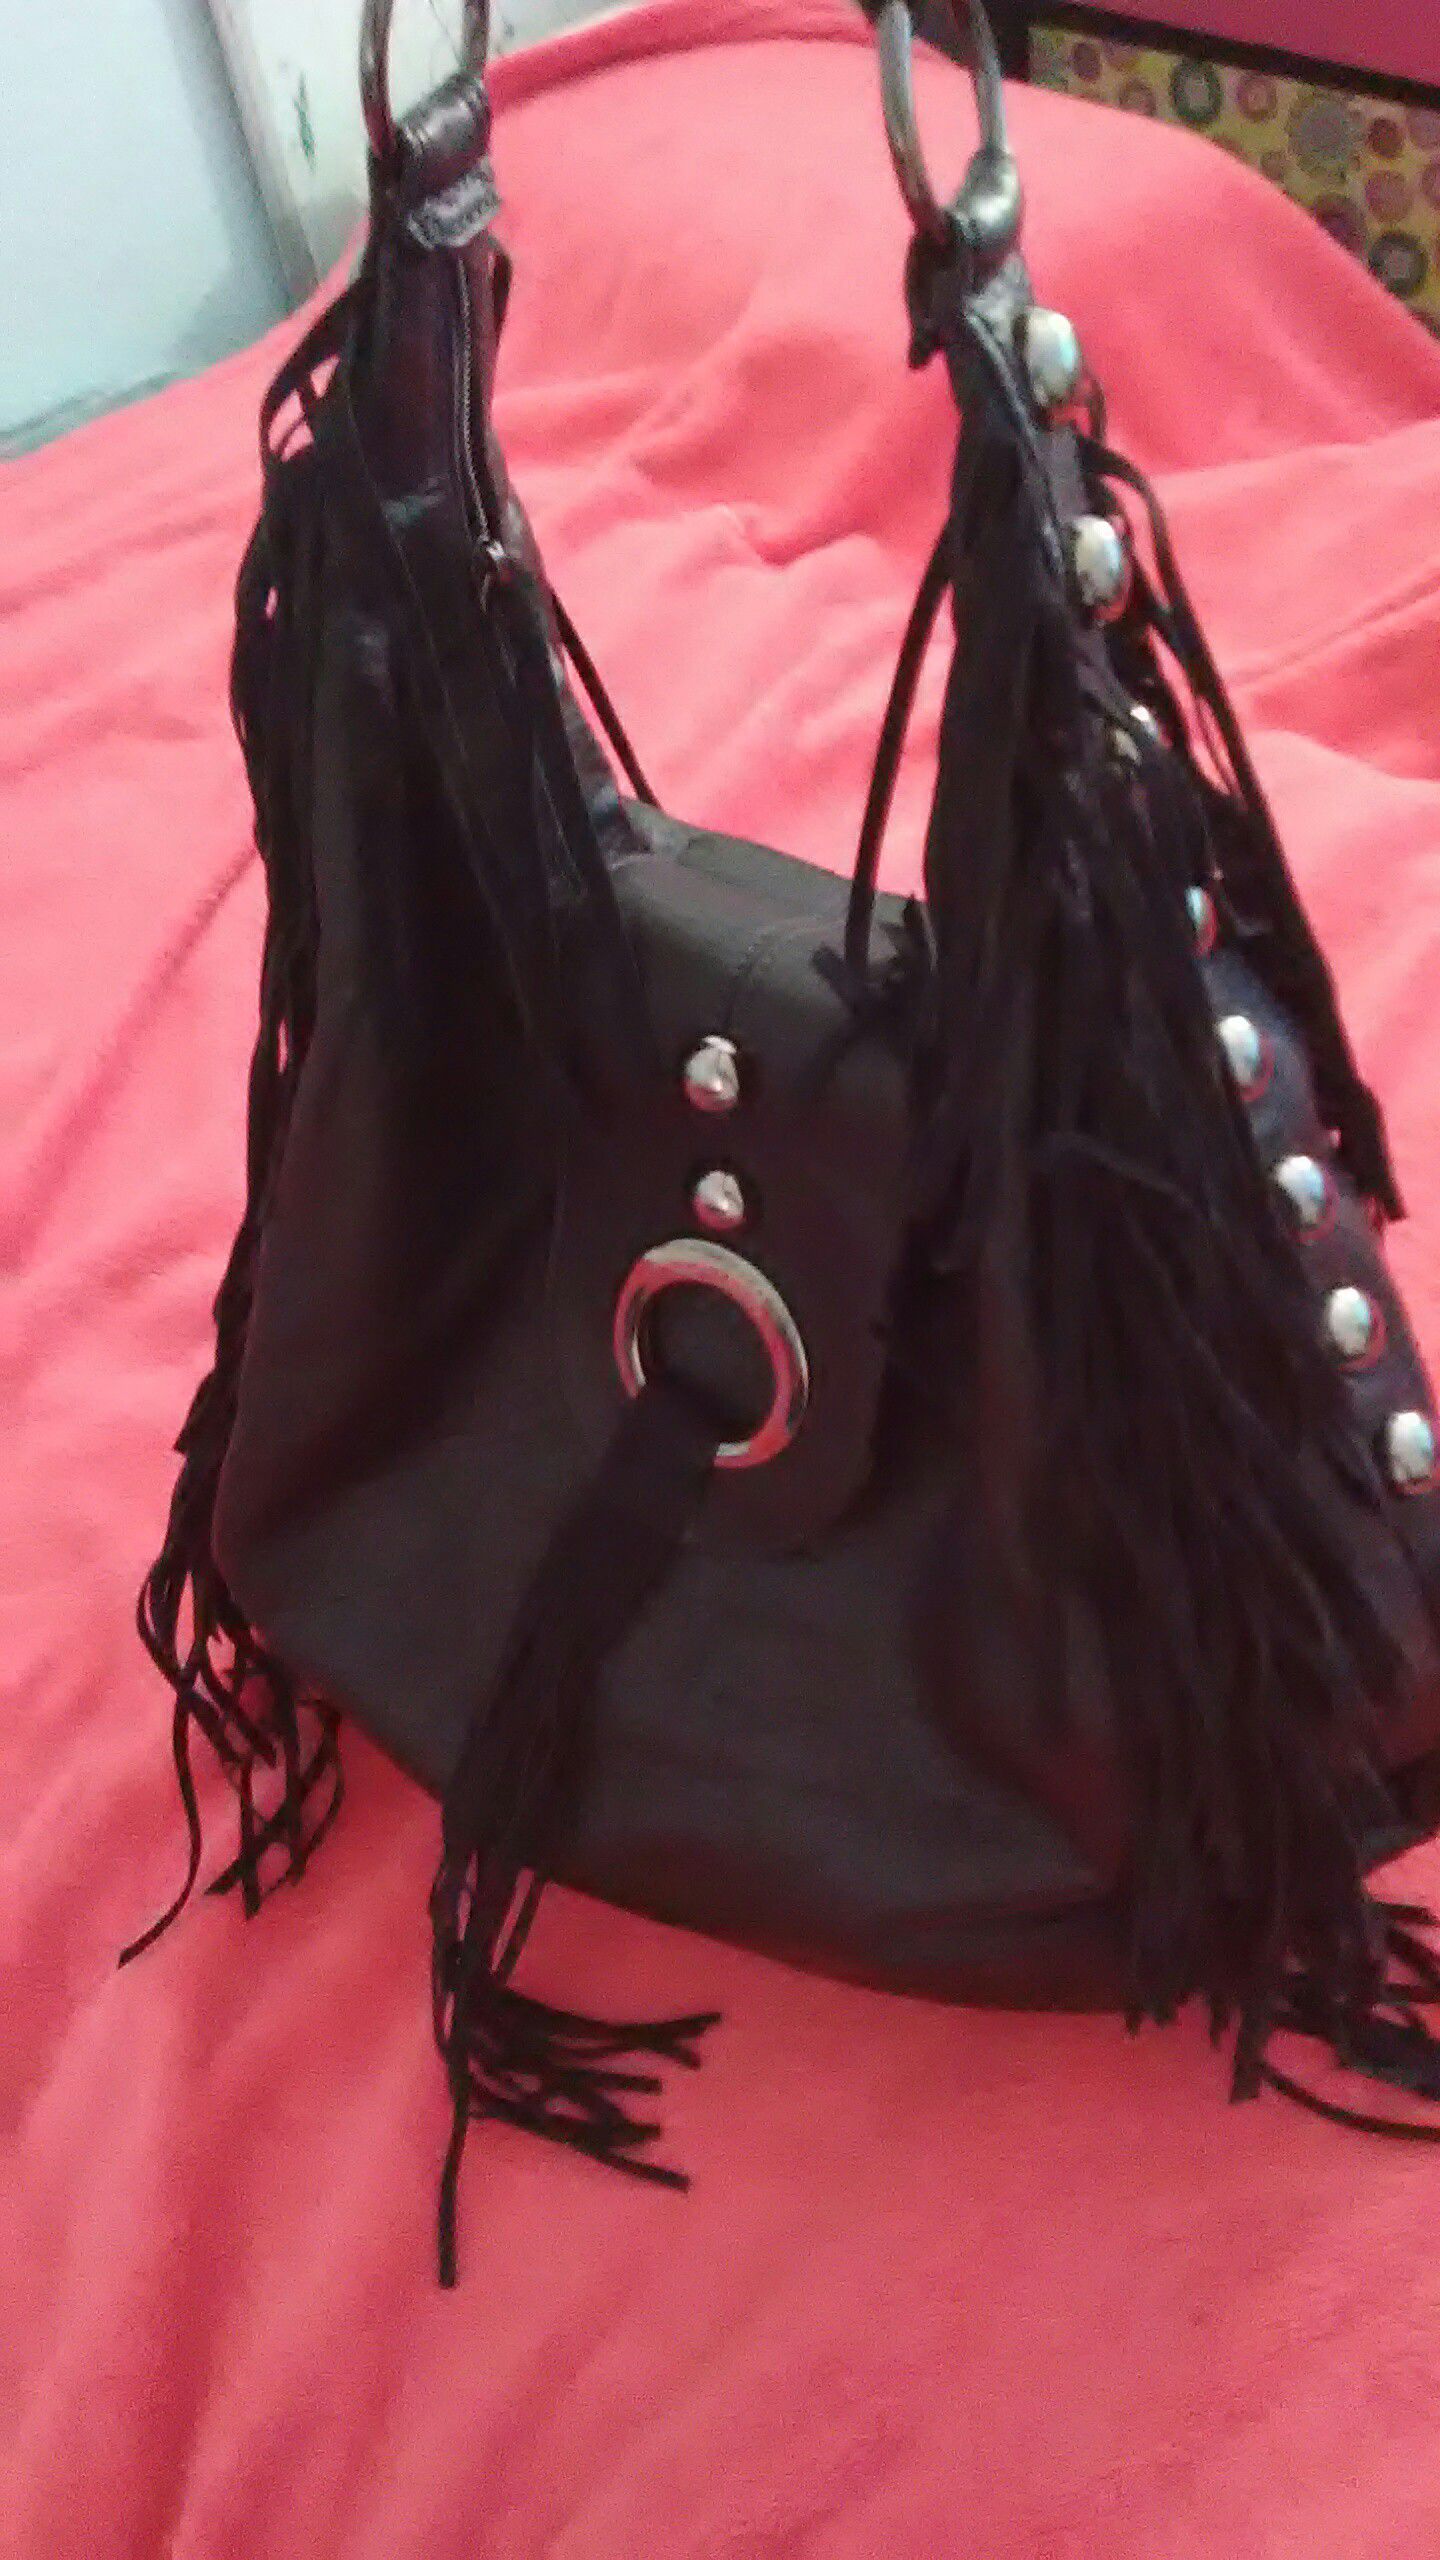 Dereon Handbags